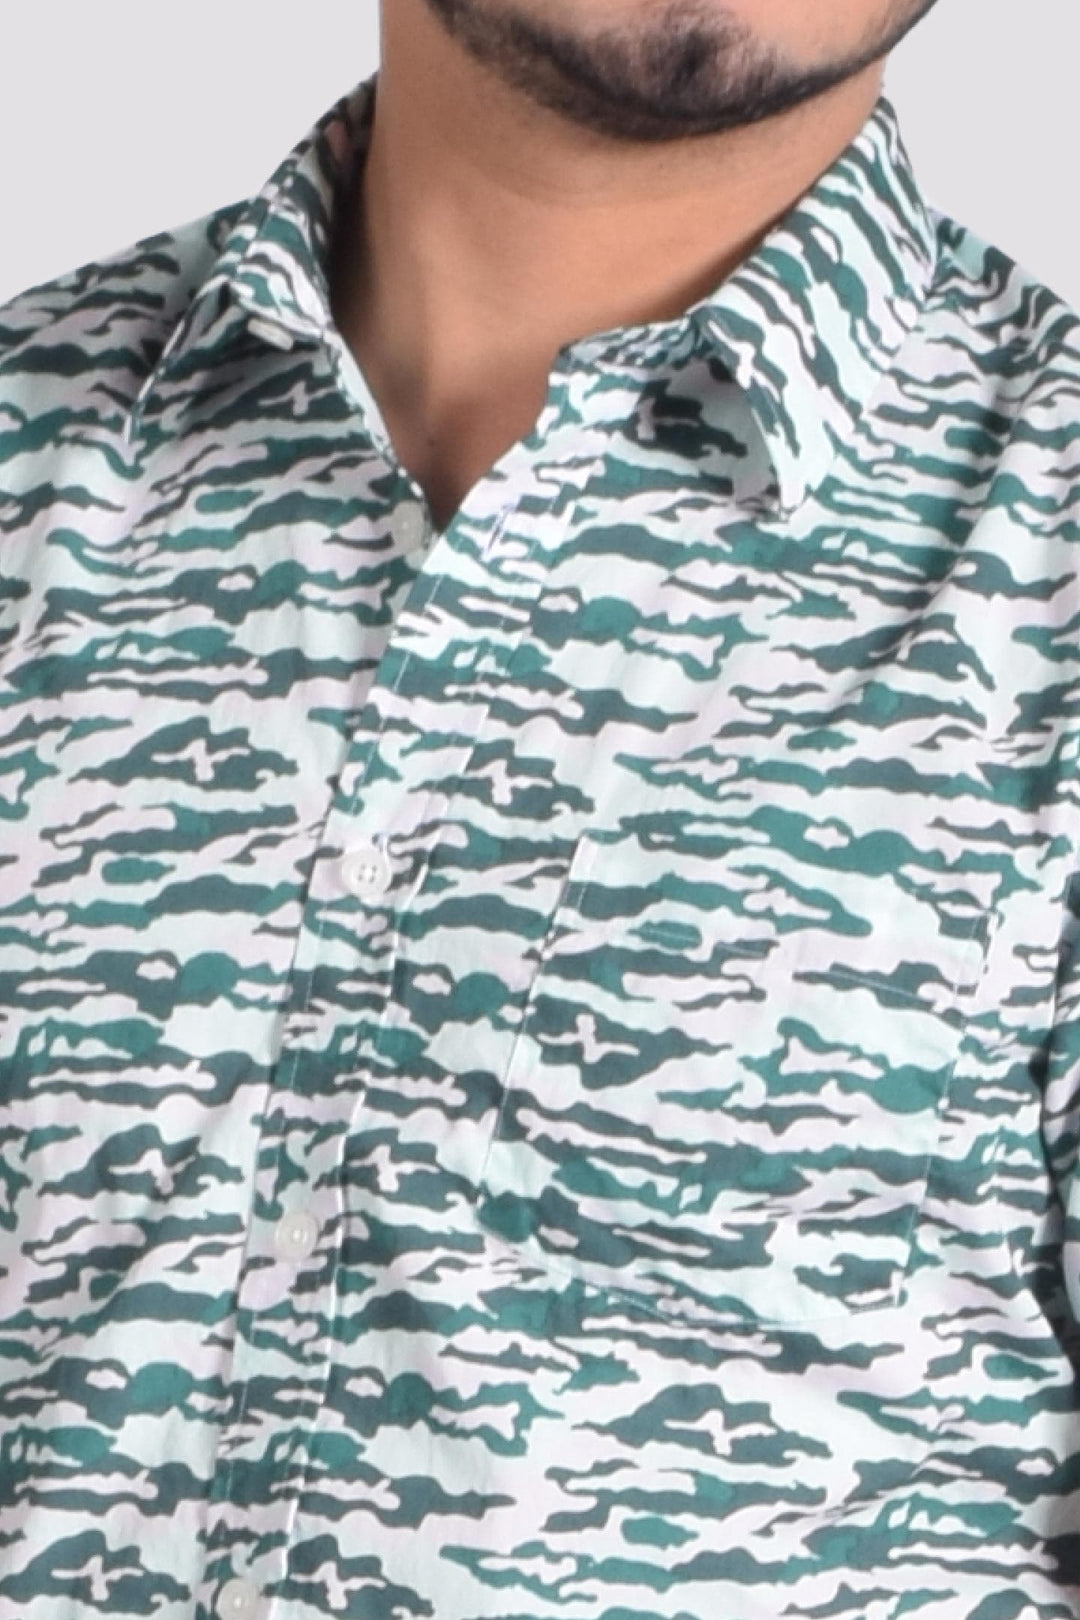 Buy Green Retro Camo Short Sleeve Shirt for Short Men | Ash & Erie   Short Sleeve Everyday Shirts